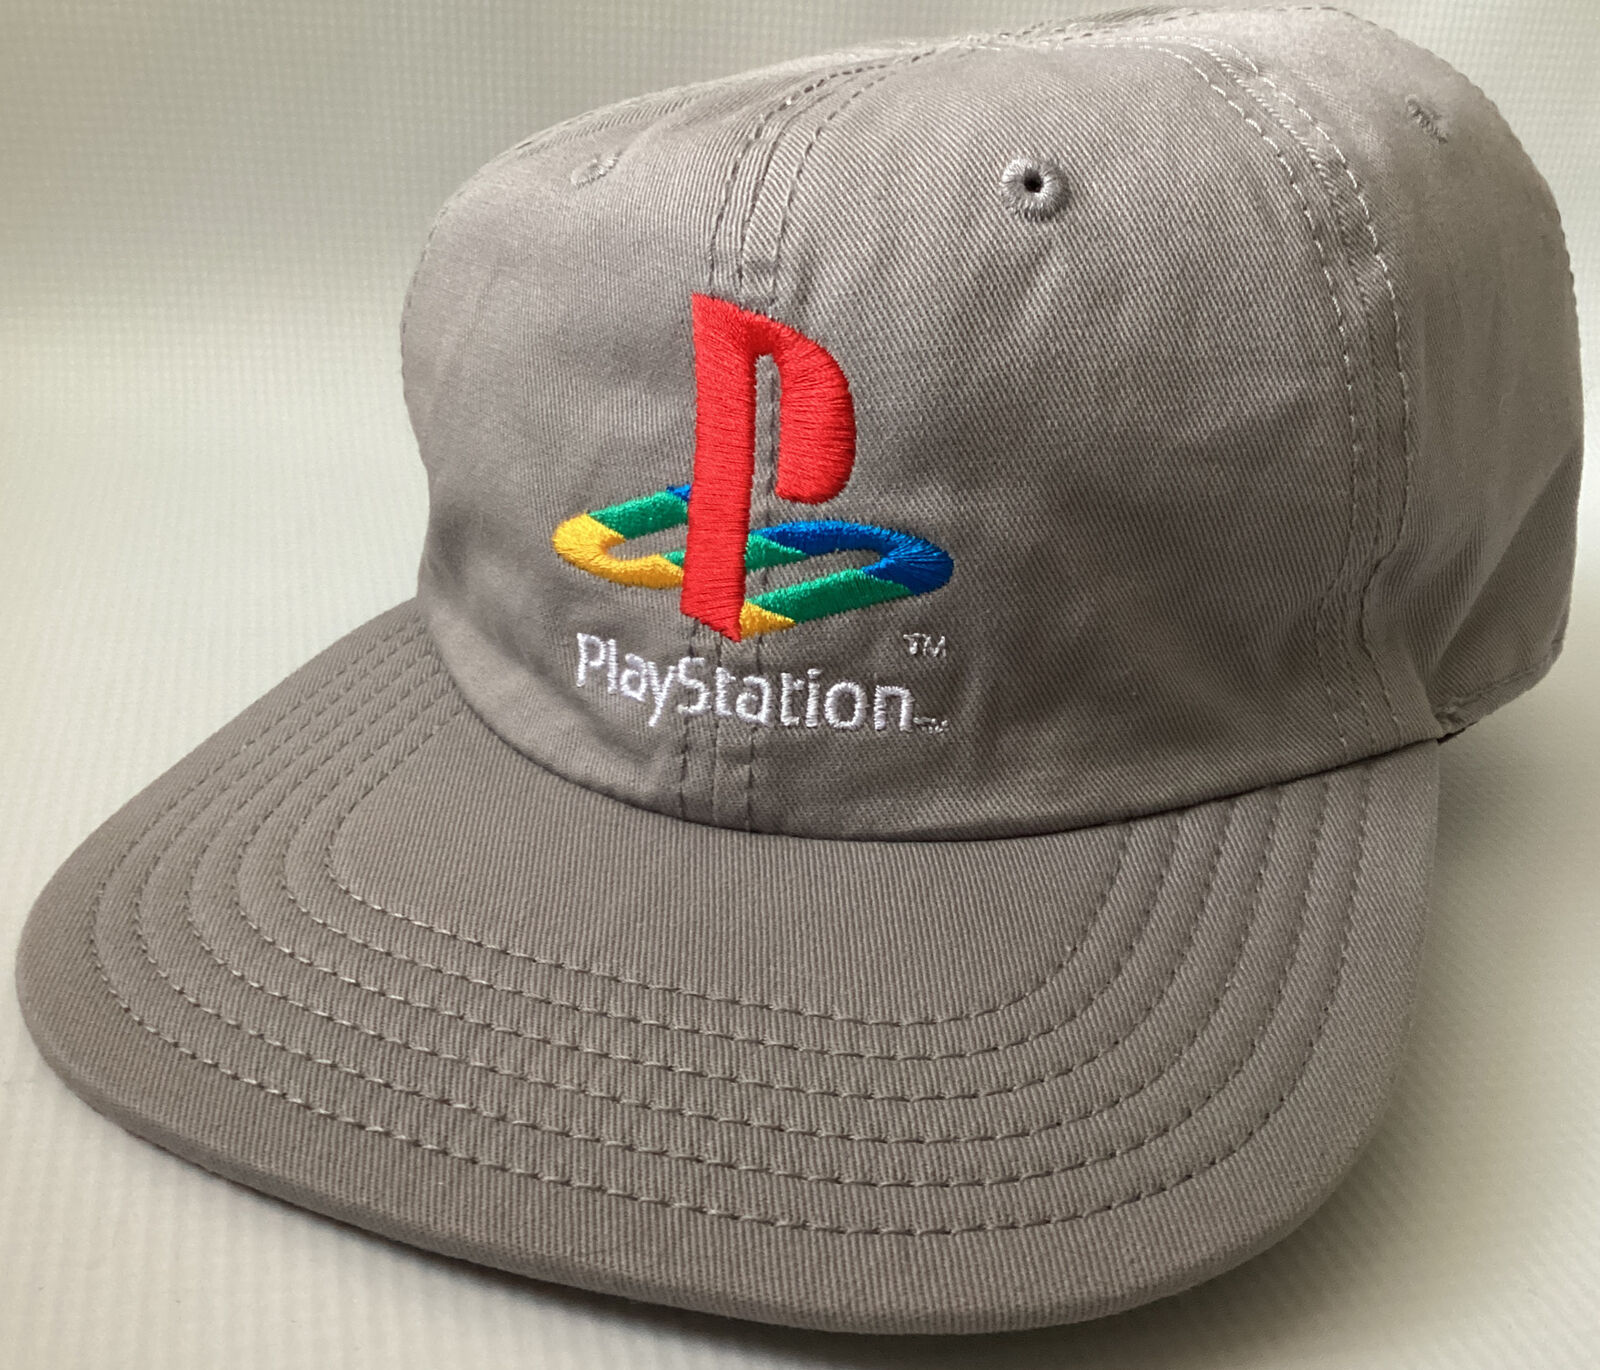 Sony Playstation Hat Cap - REVERSIBLE!